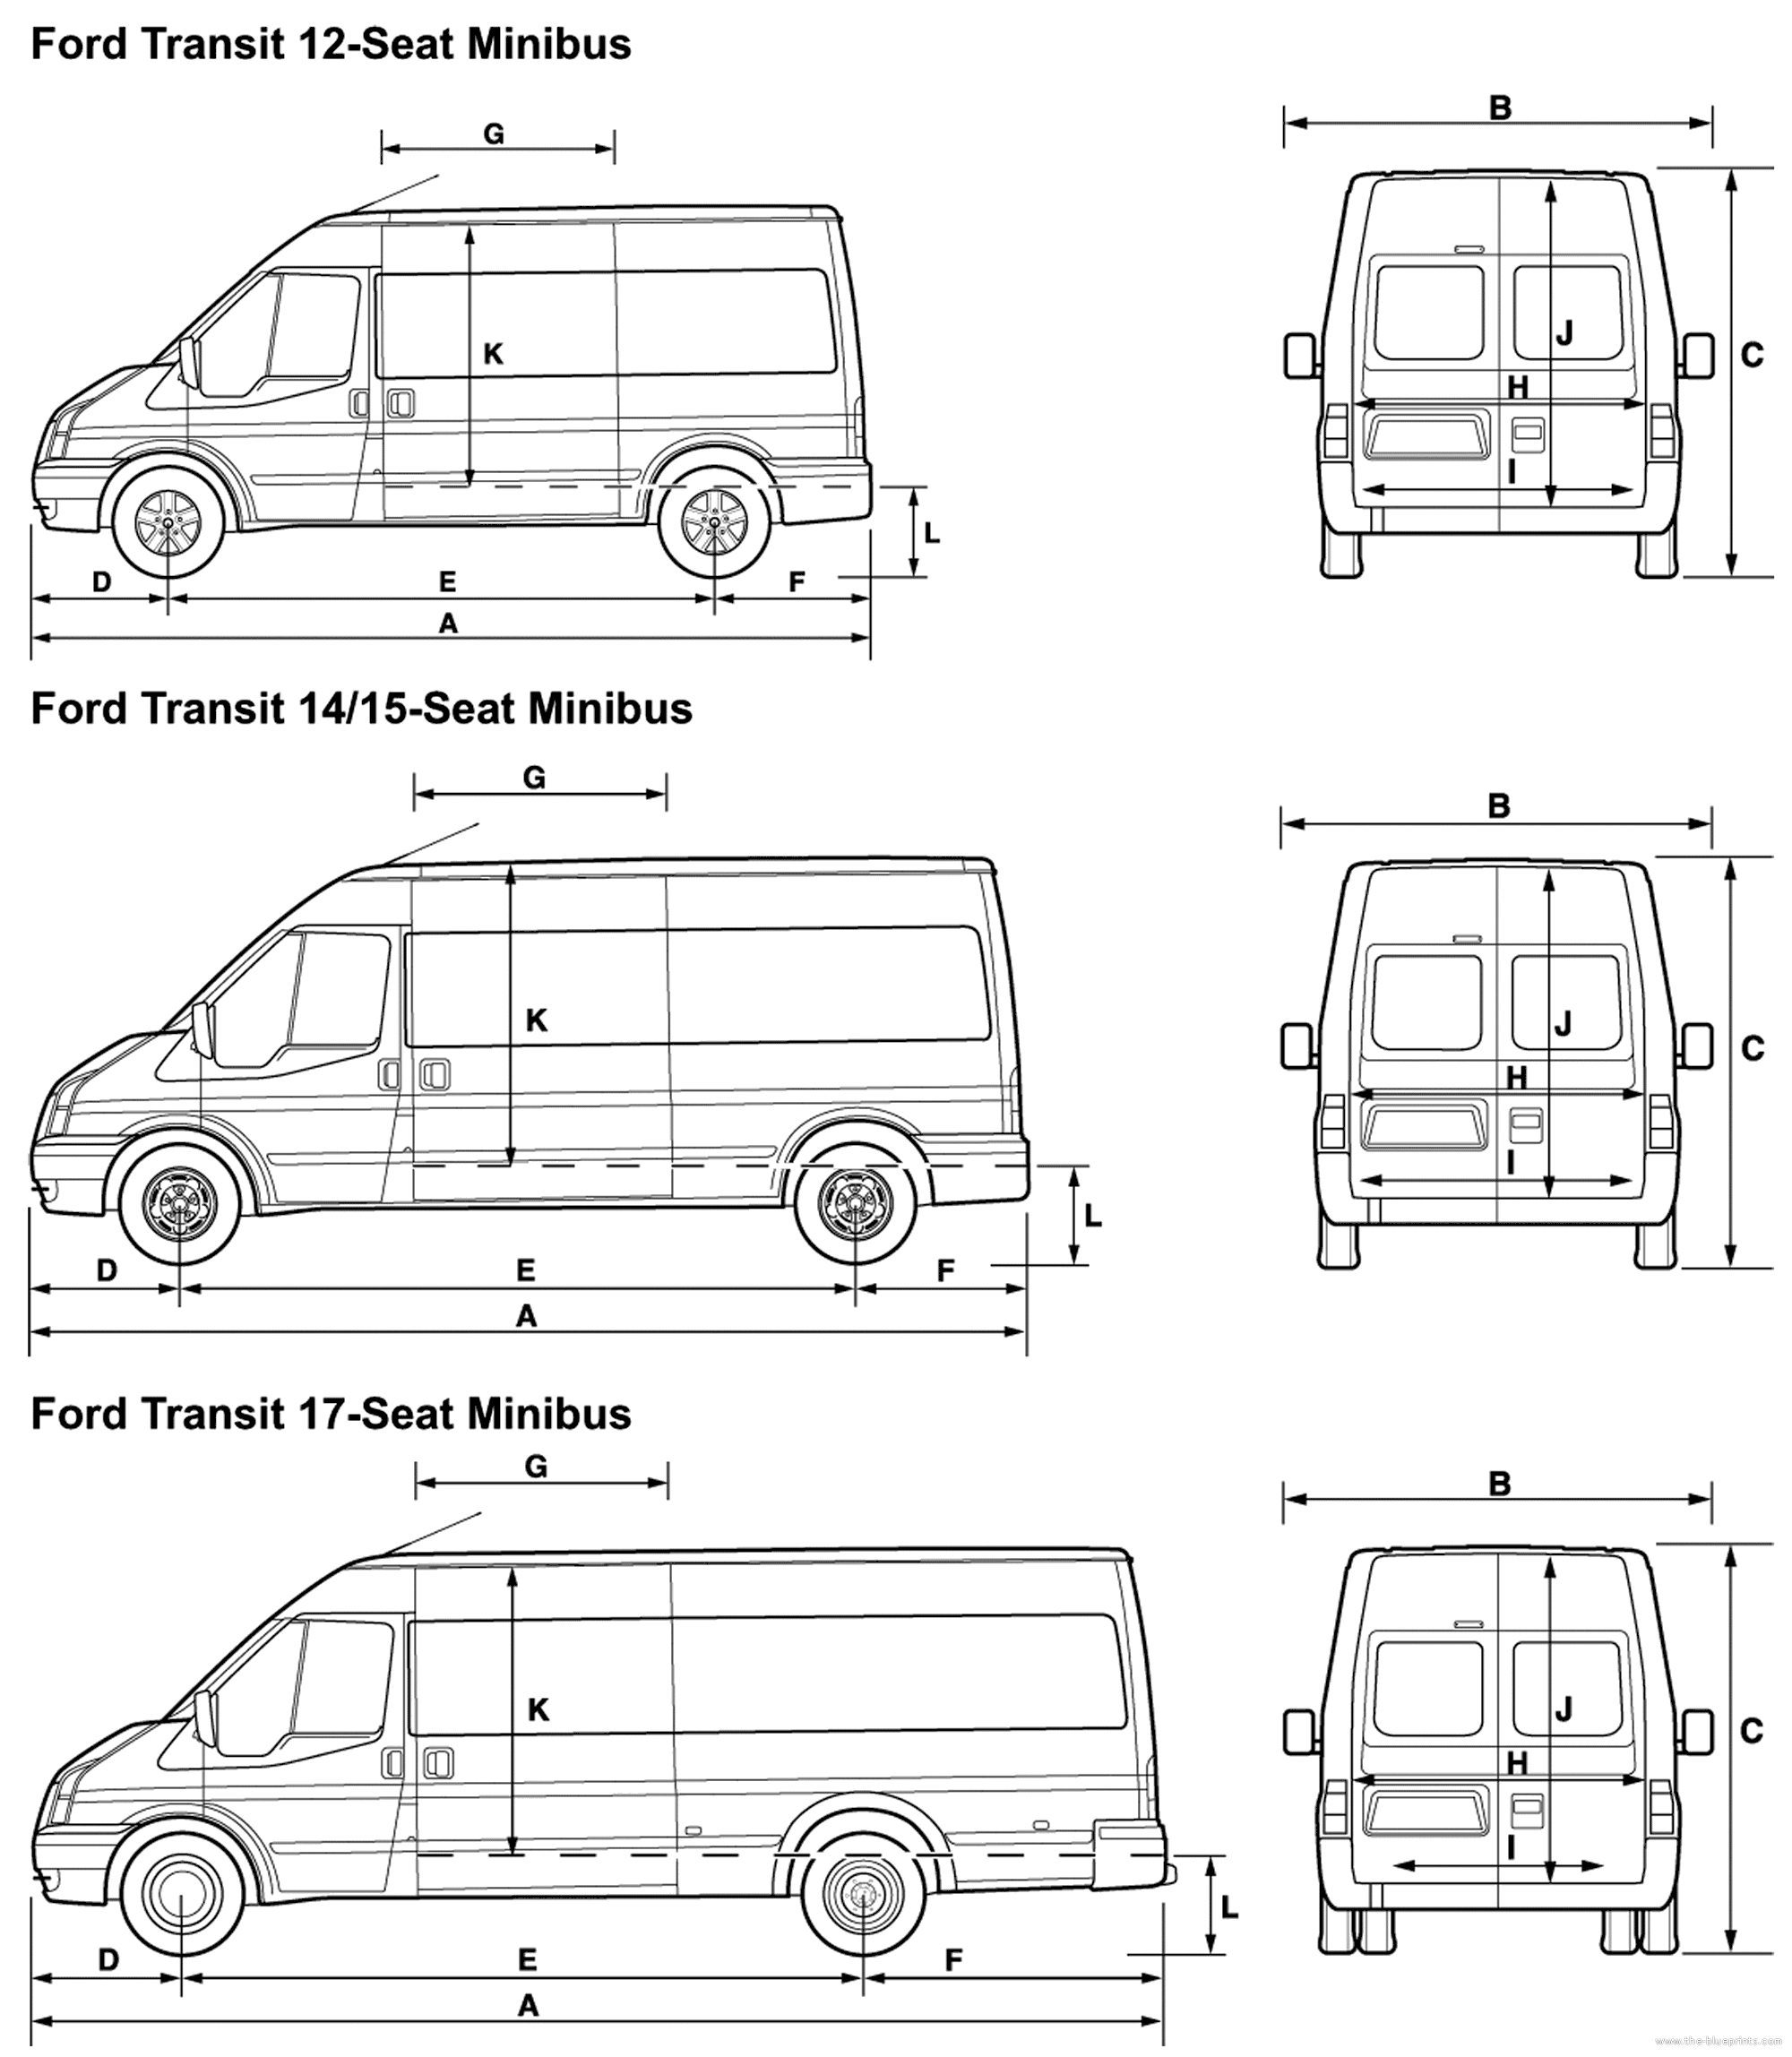 Ford transit tourneo minibus dimensions #1